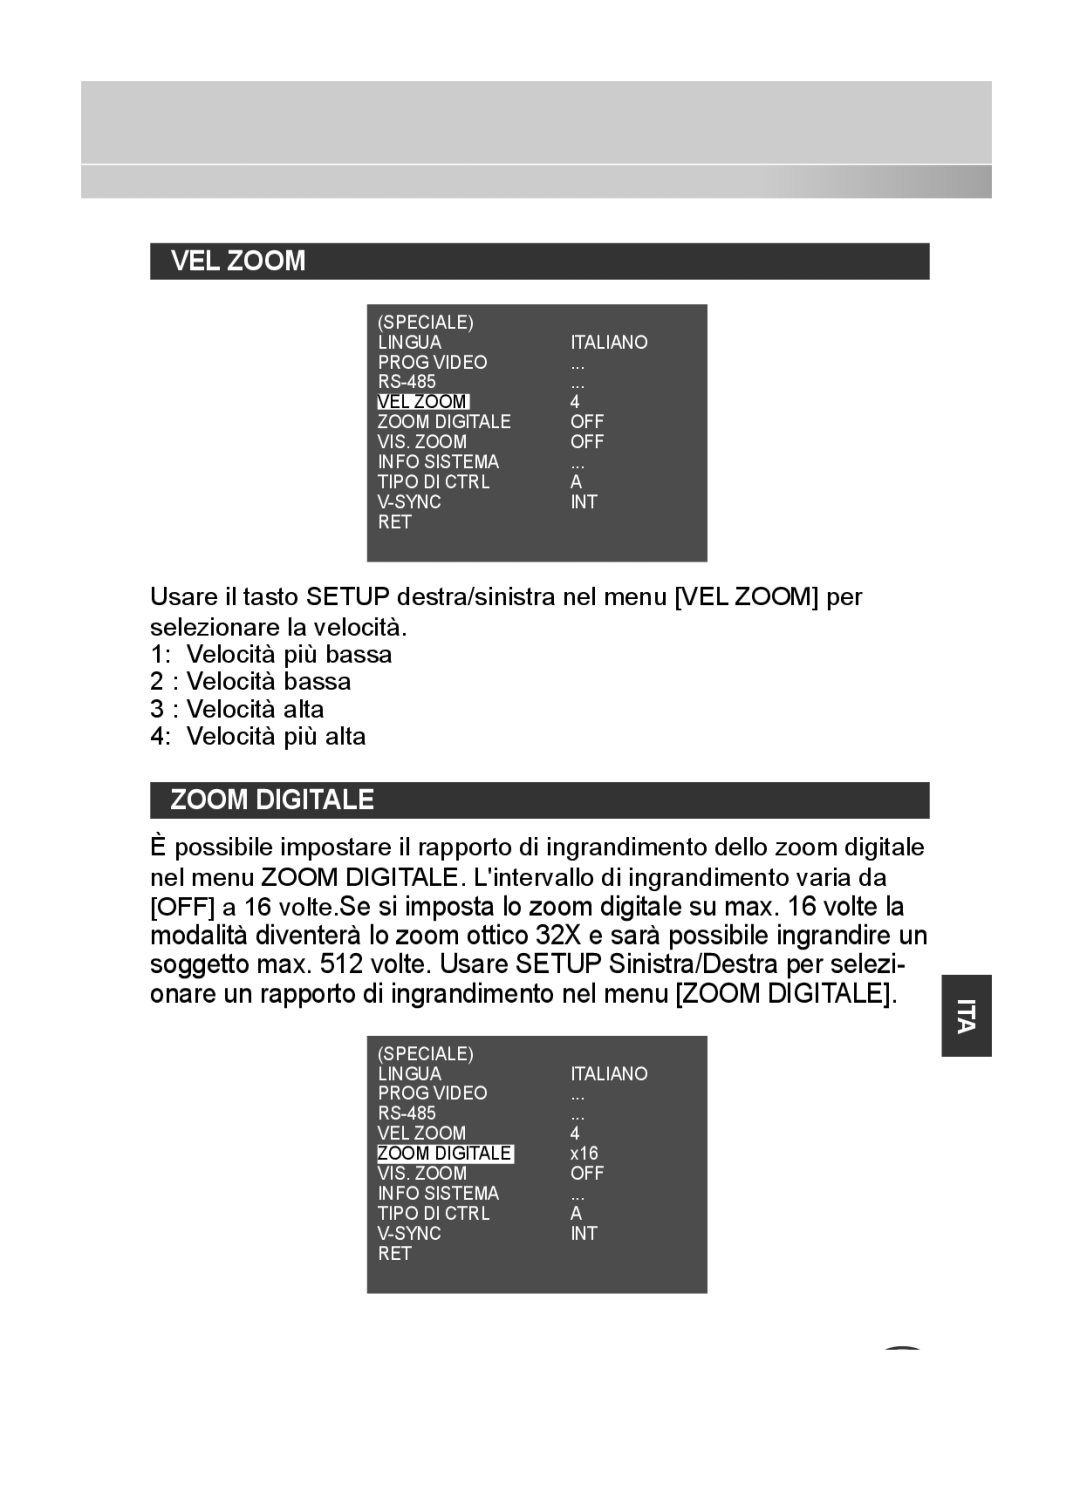 Samsung C4335(P), C4333(P), C4235(P) user manual VEL Zoom, Zoom Digitale 